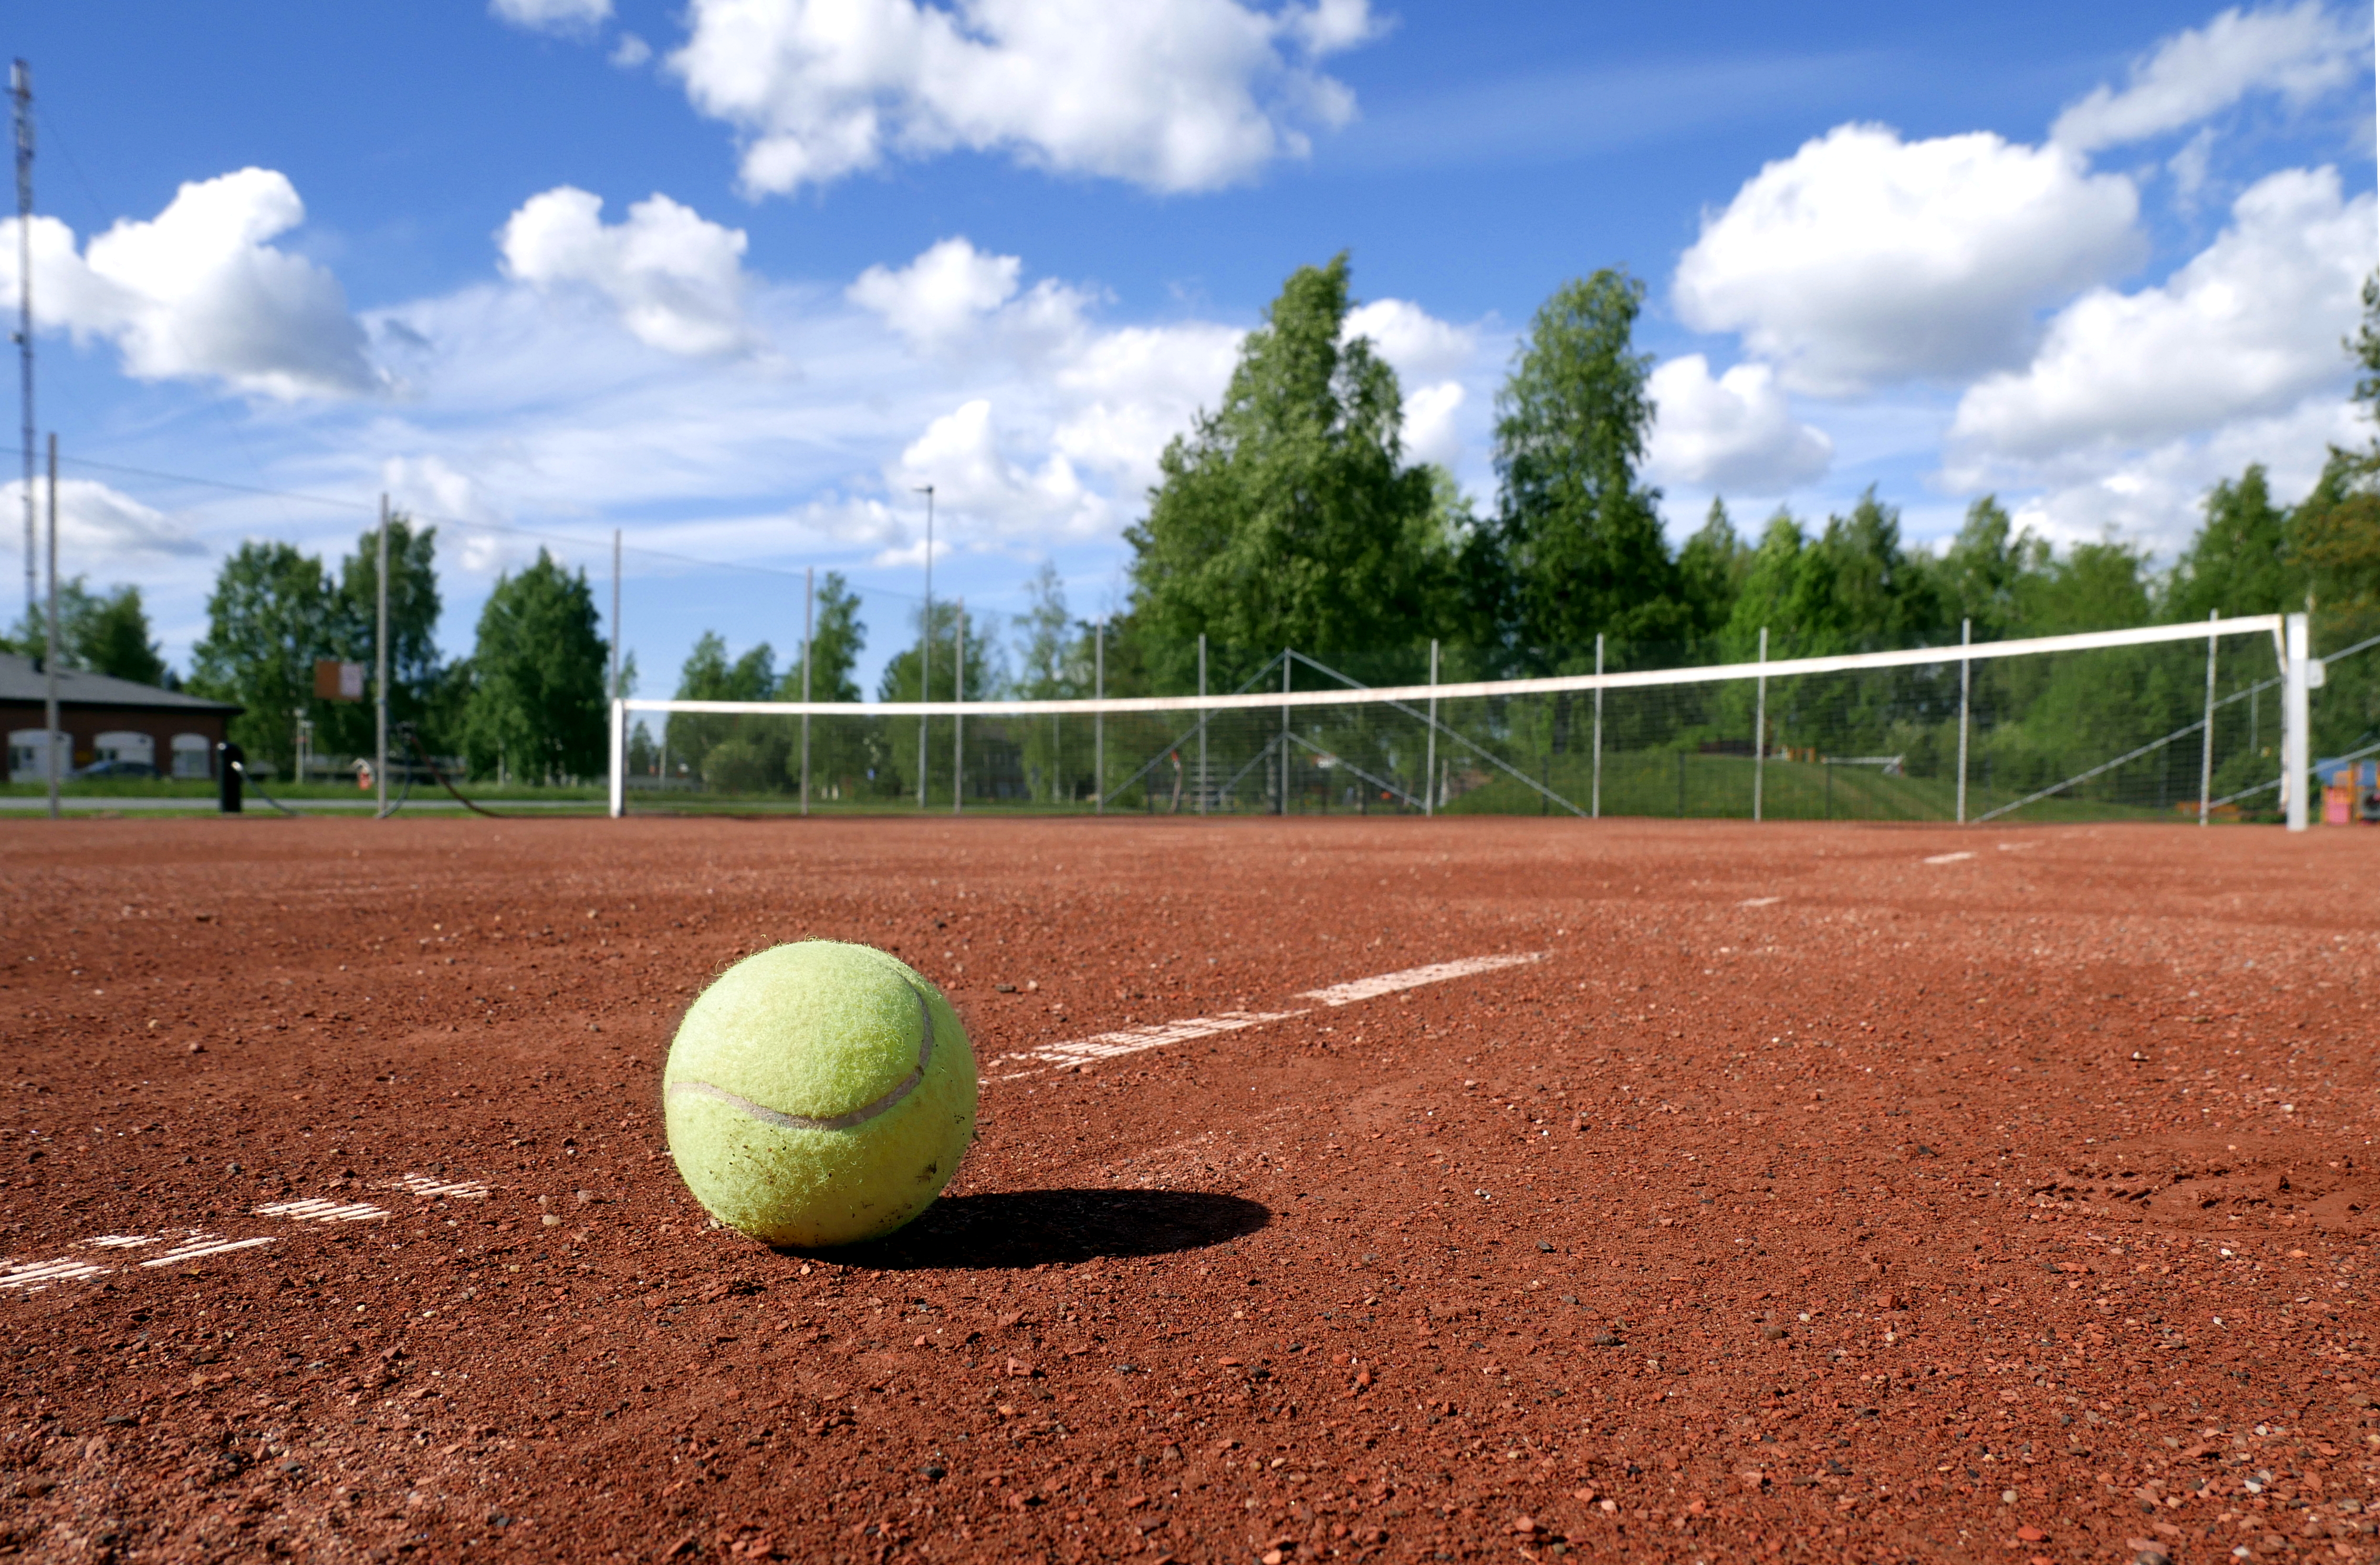 File:Tennis ball on tennis court 20170619.jpg - Wikimedia Commons